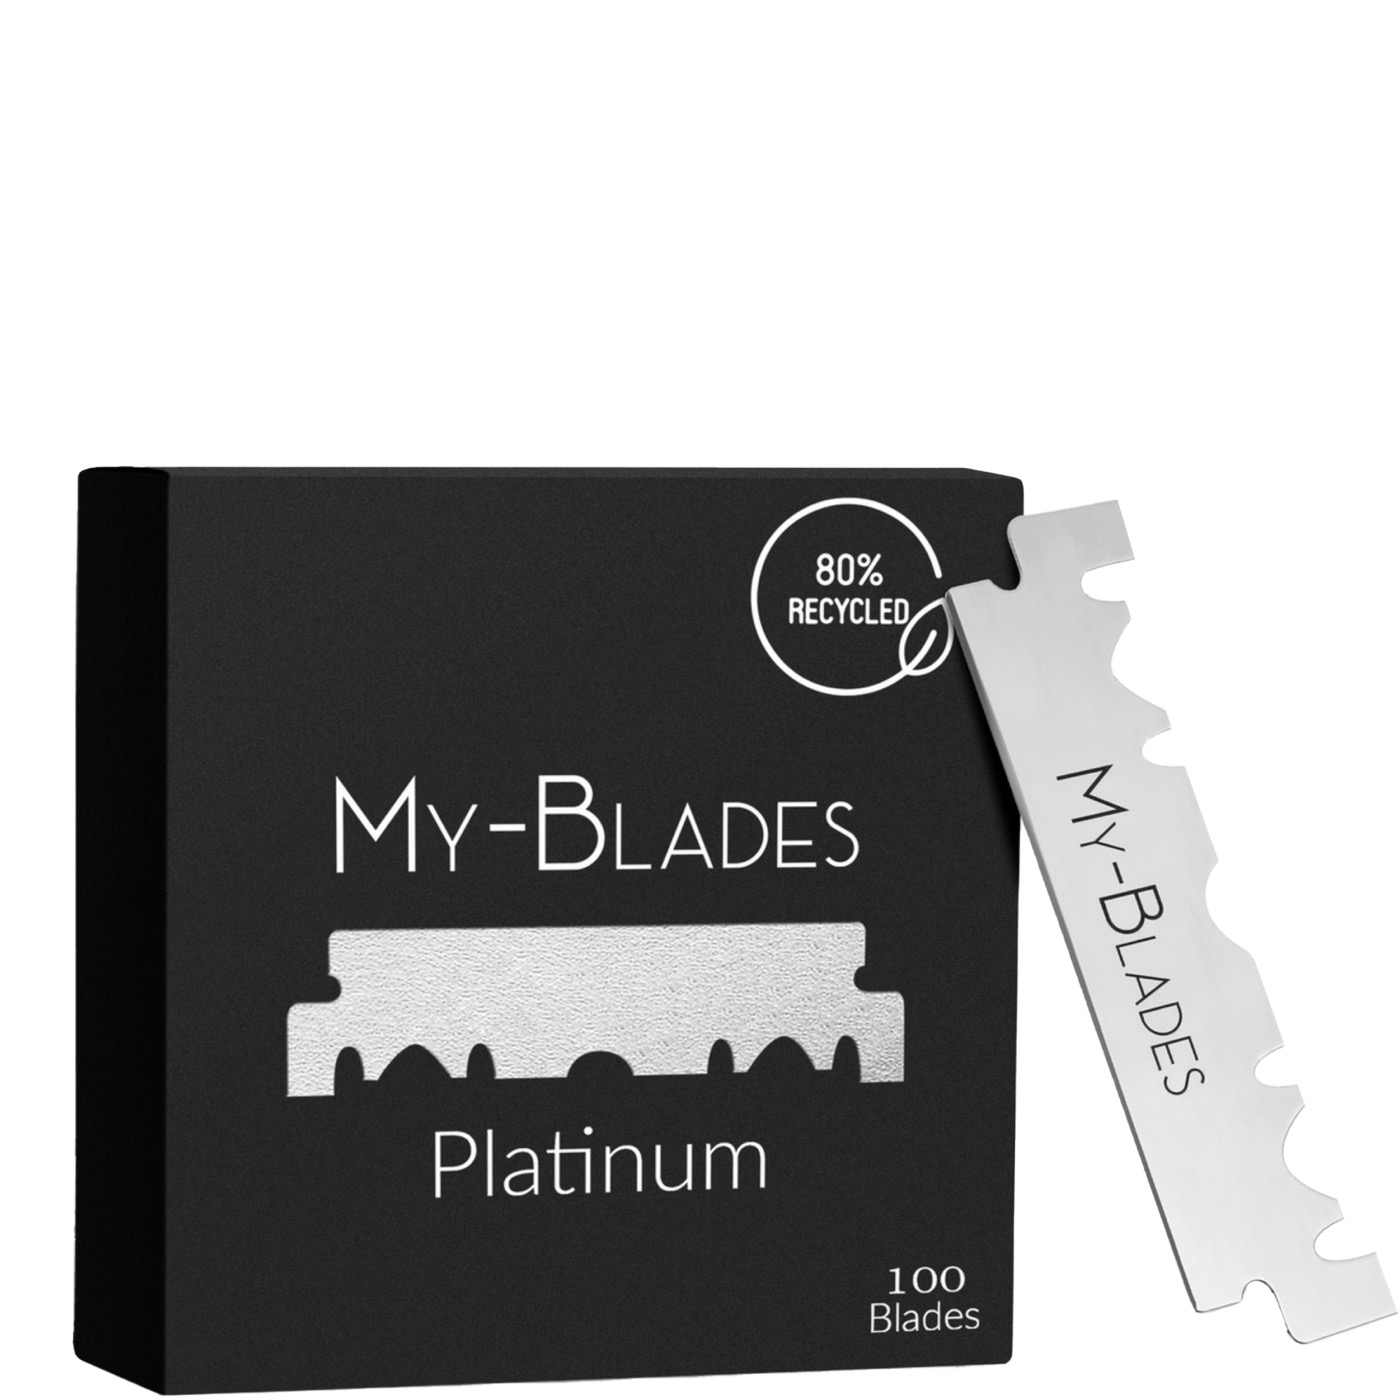 Duurzaam geproduceerde Single edge blades Platinum